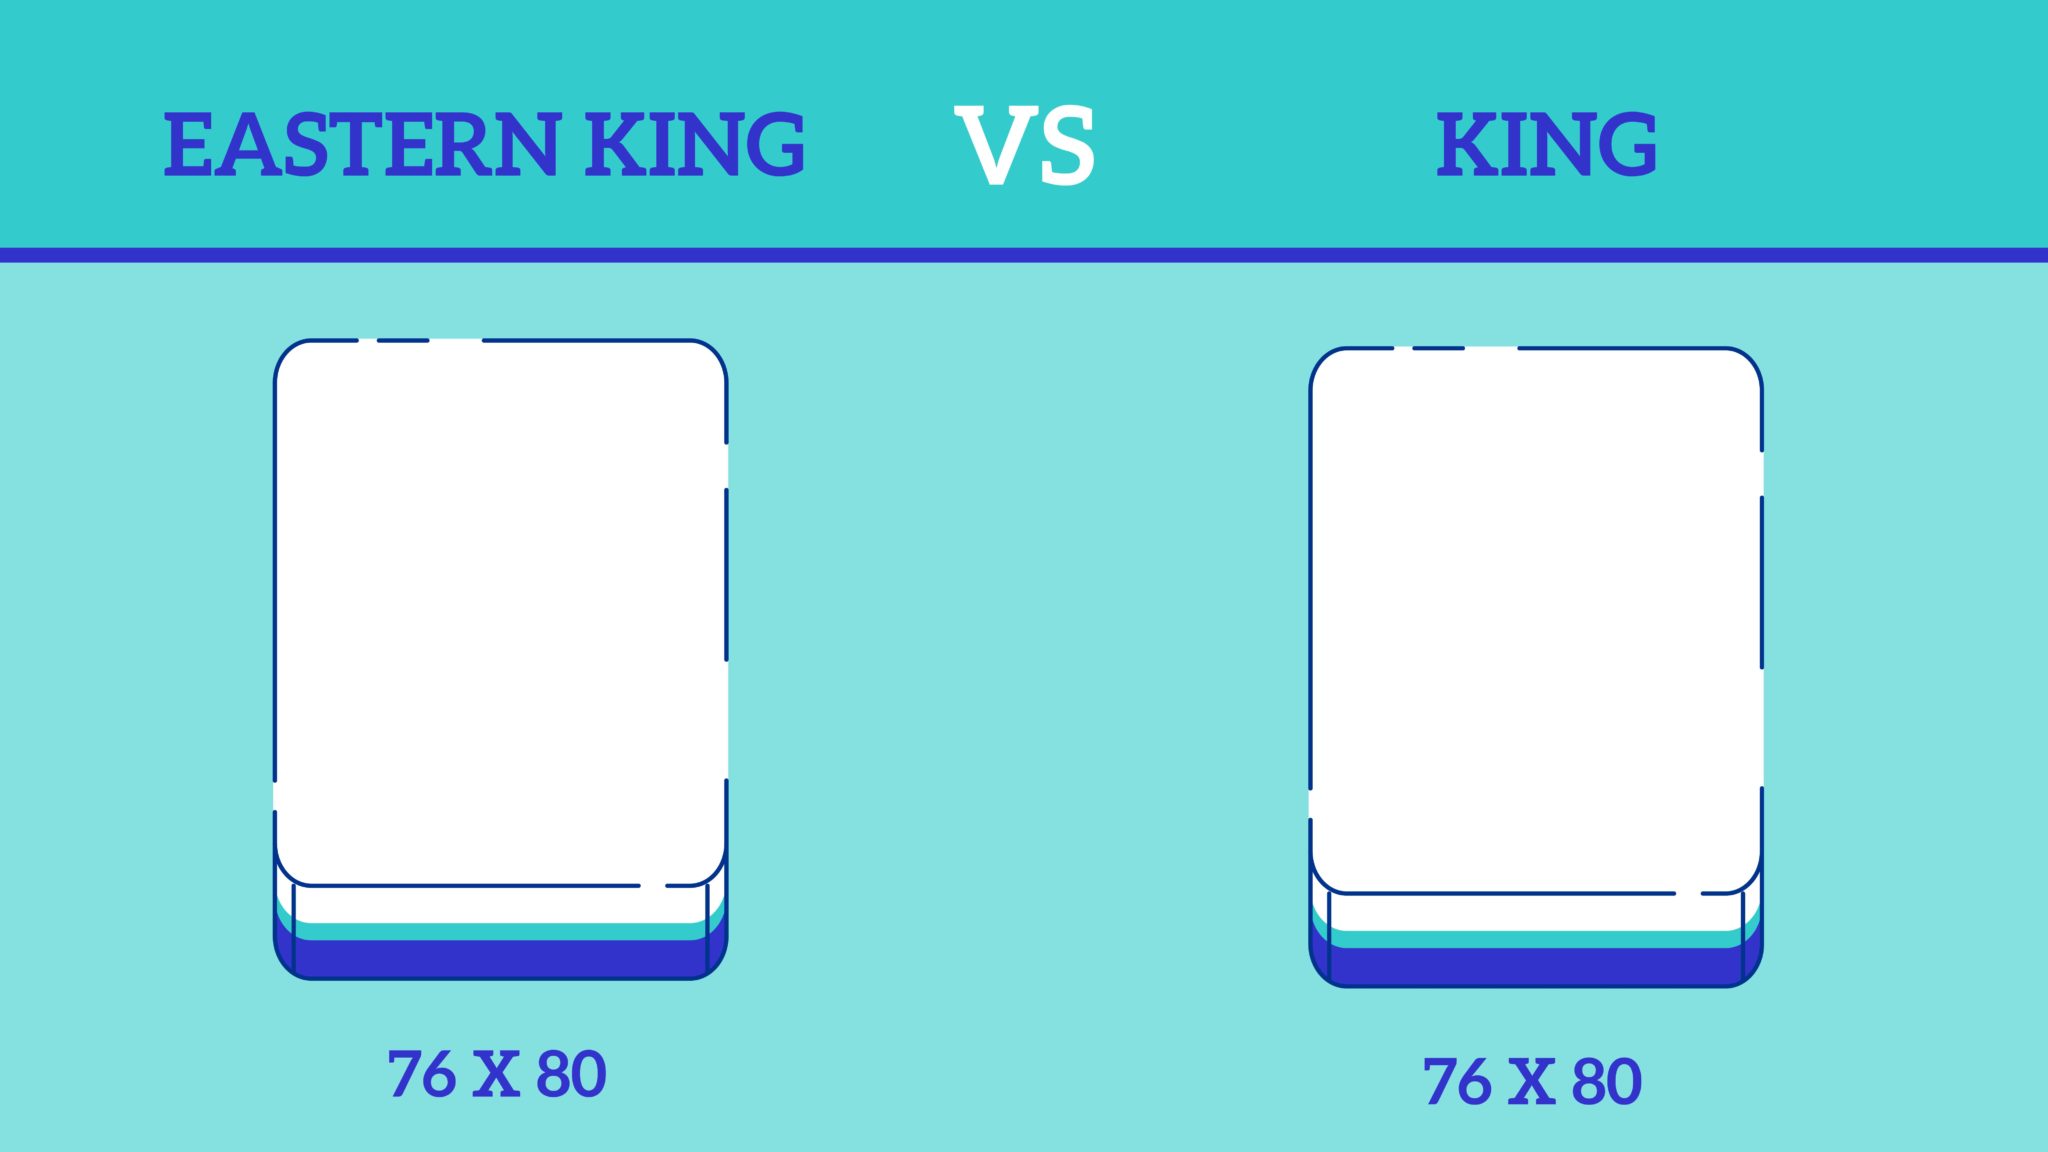 eastern king mattress dimensions